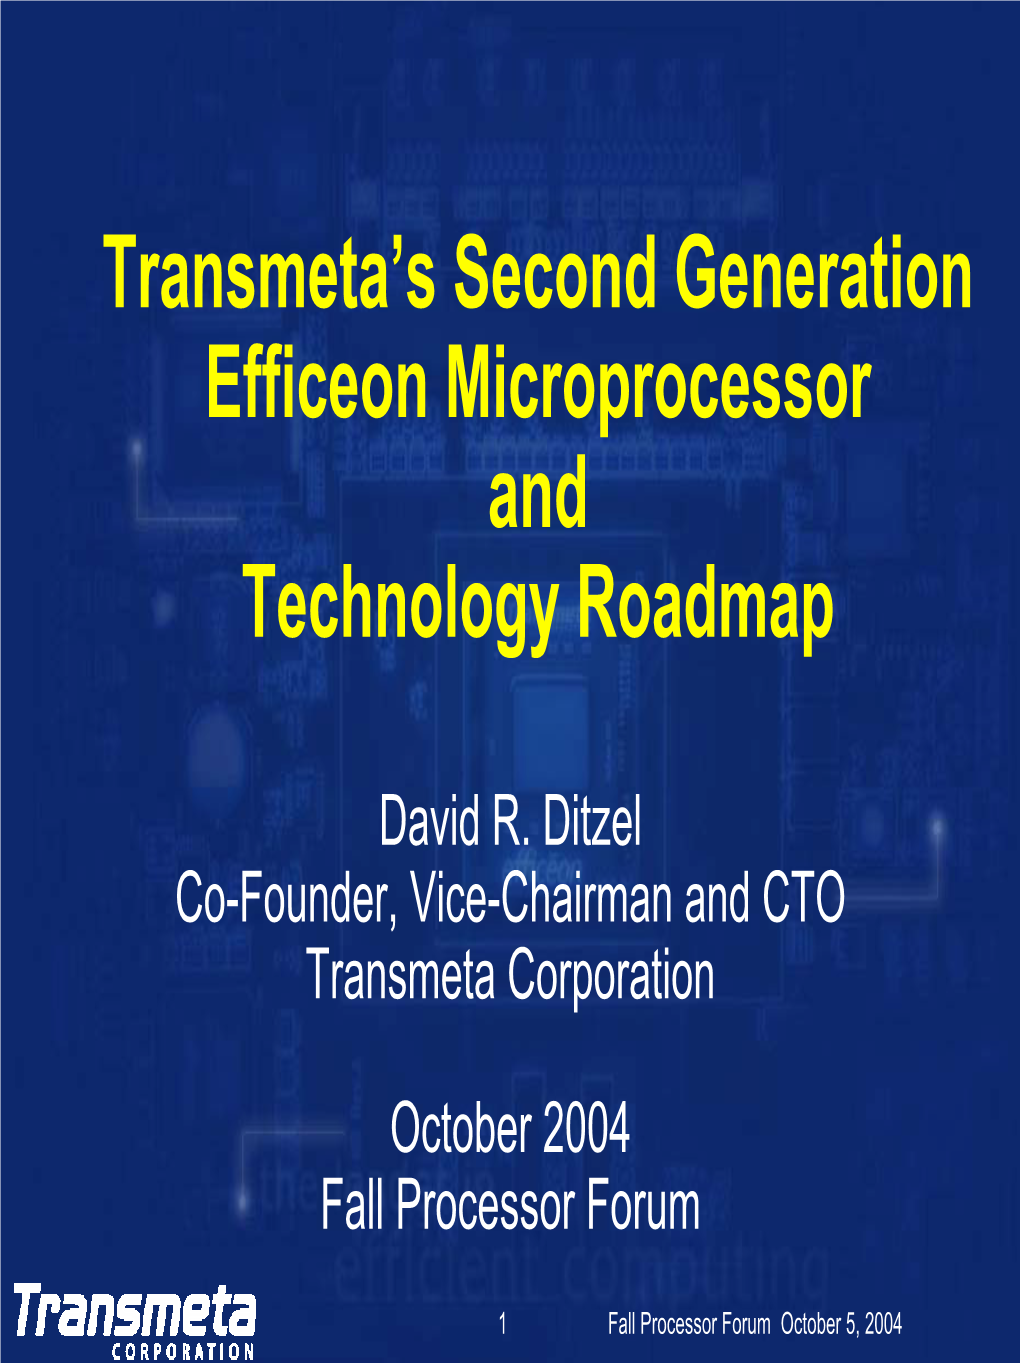 Transmeta's Second Generation Efficeon Microprocessor And